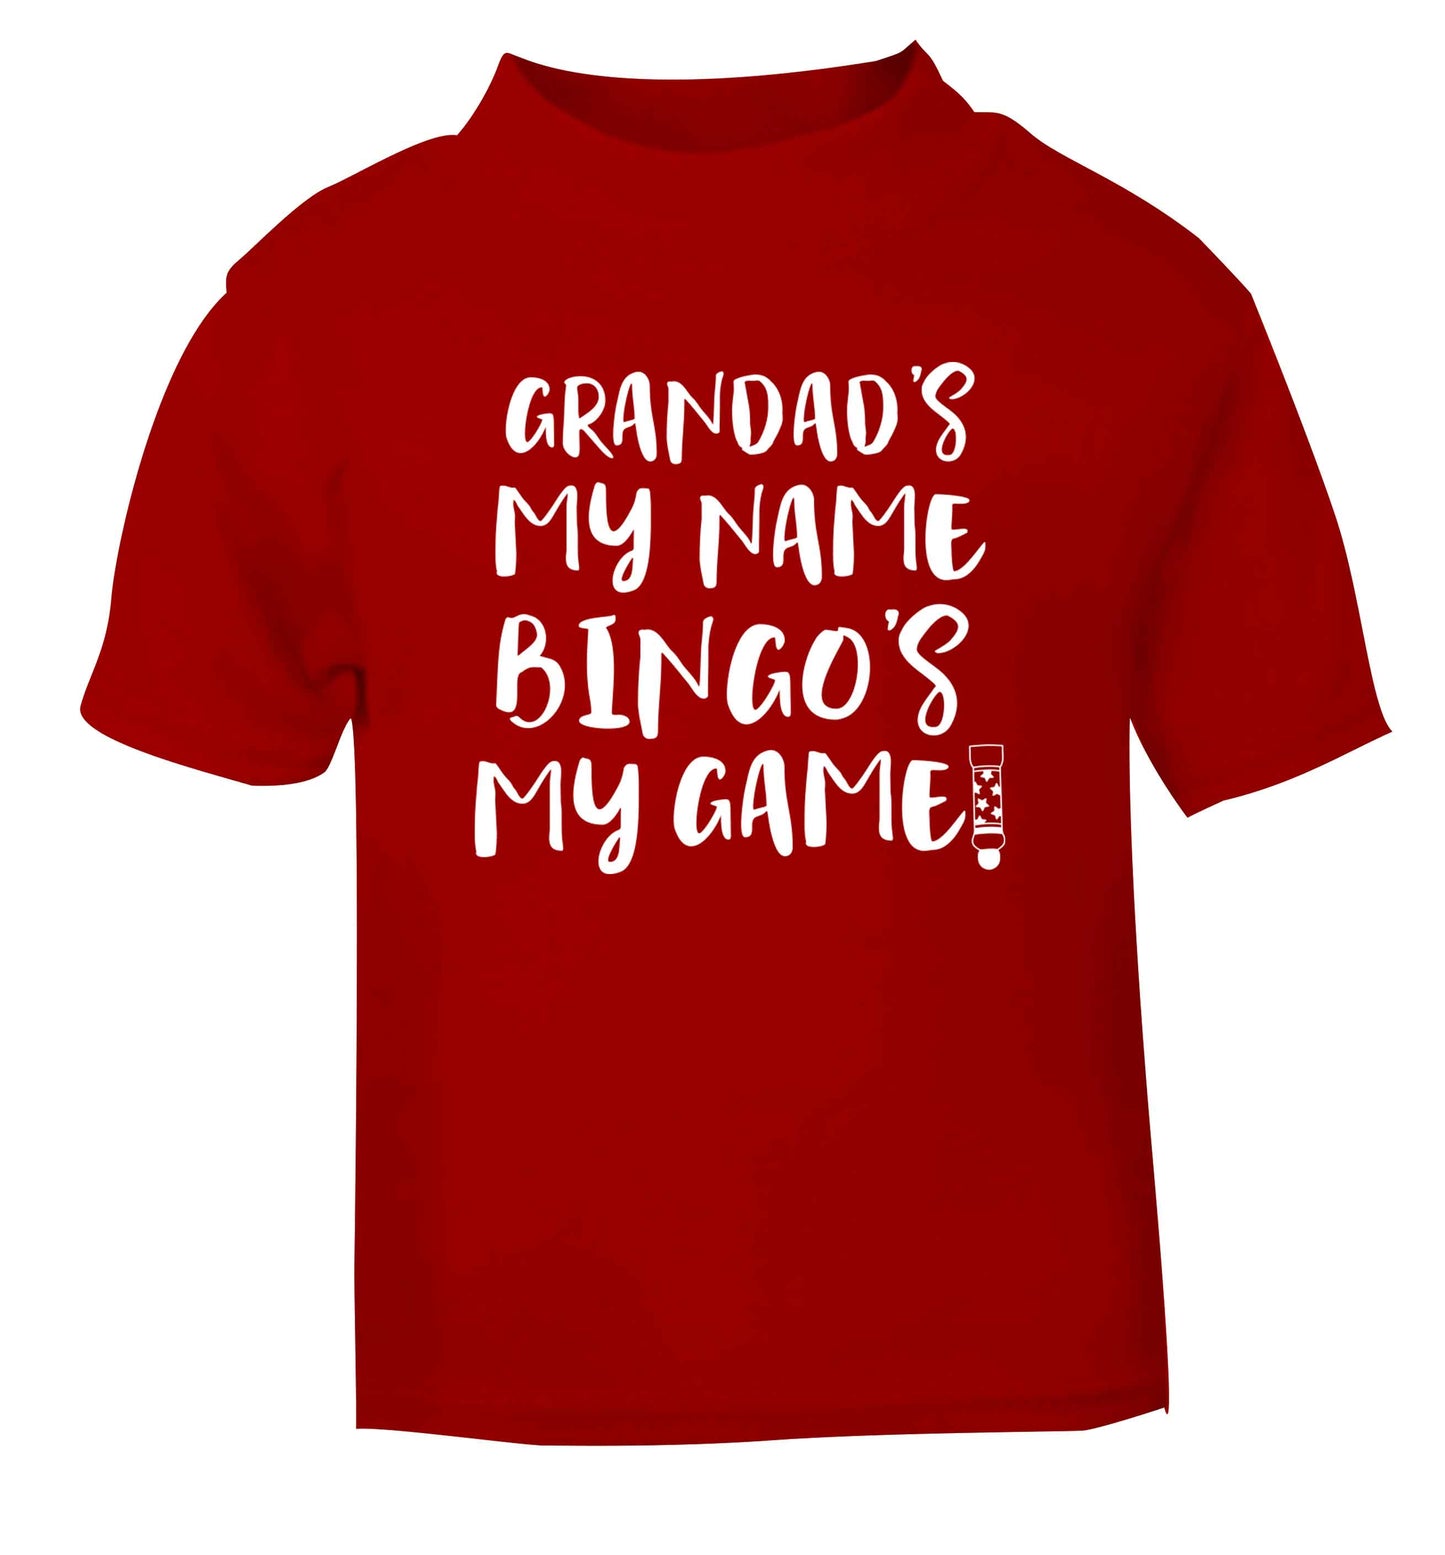 Grandad's my name bingo's my game! red Baby Toddler Tshirt 2 Years